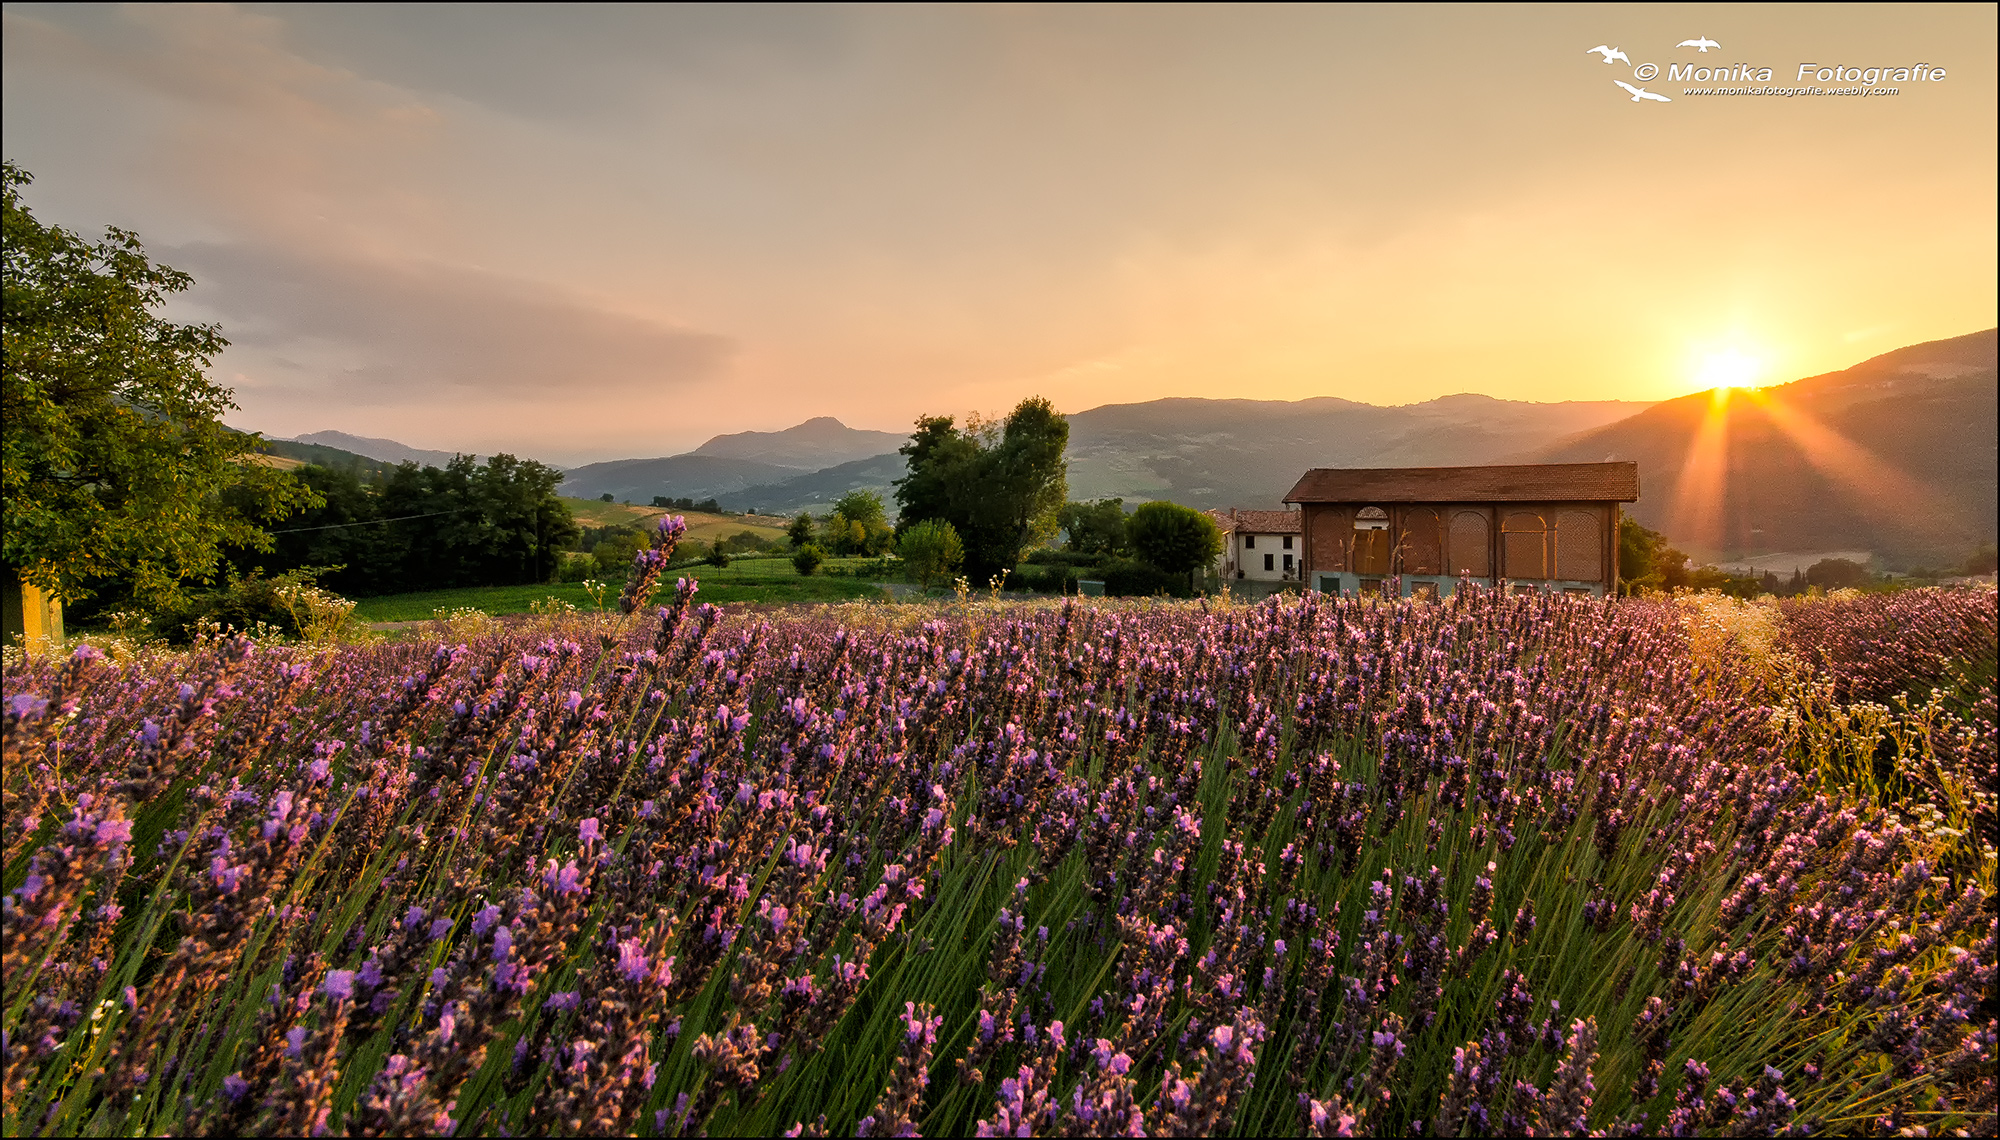 Rallio Lichtenberg: Sunset among the flowers of lavender...